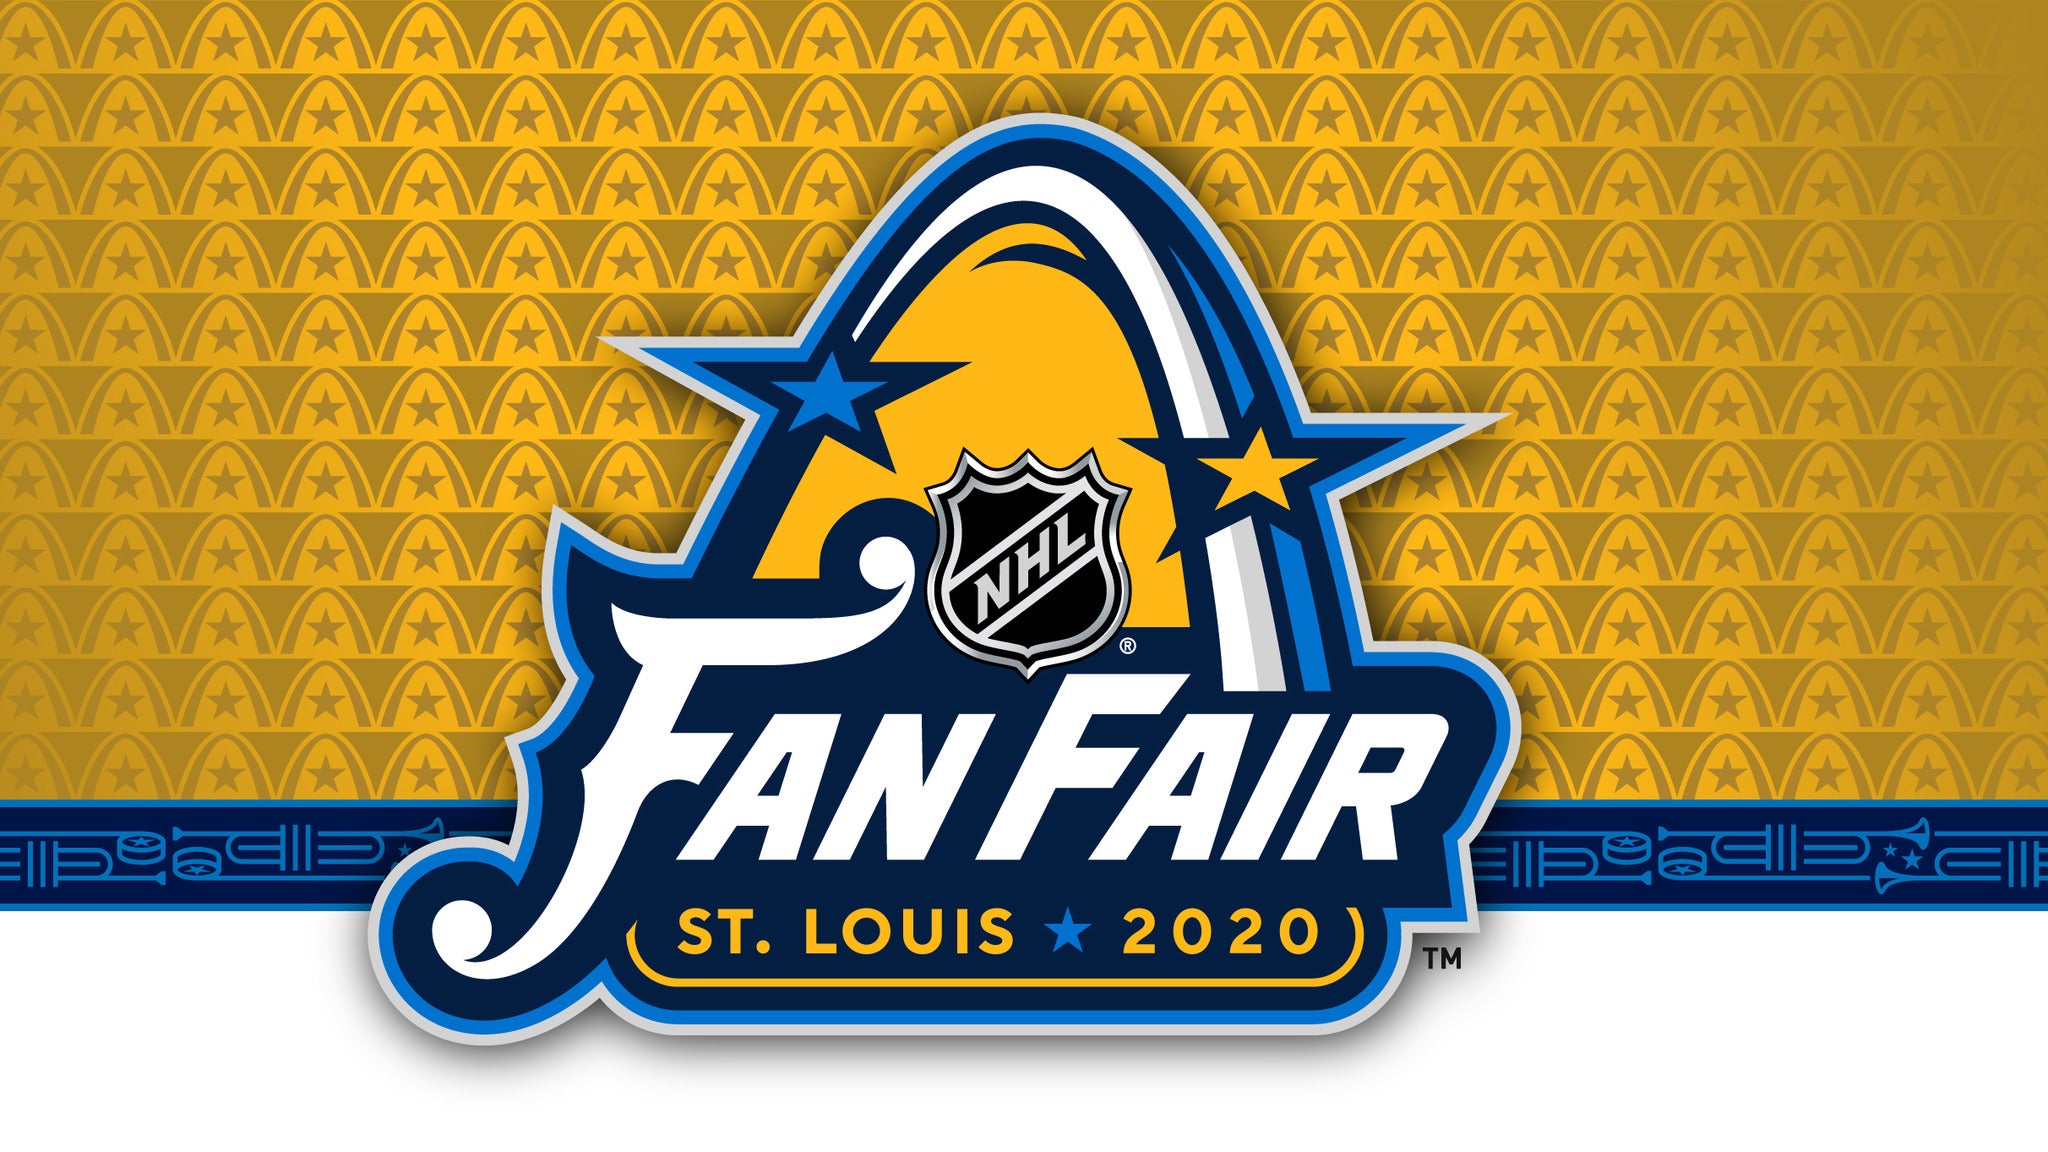 NHL Fan Fair Tickets Single Game Tickets & Schedule